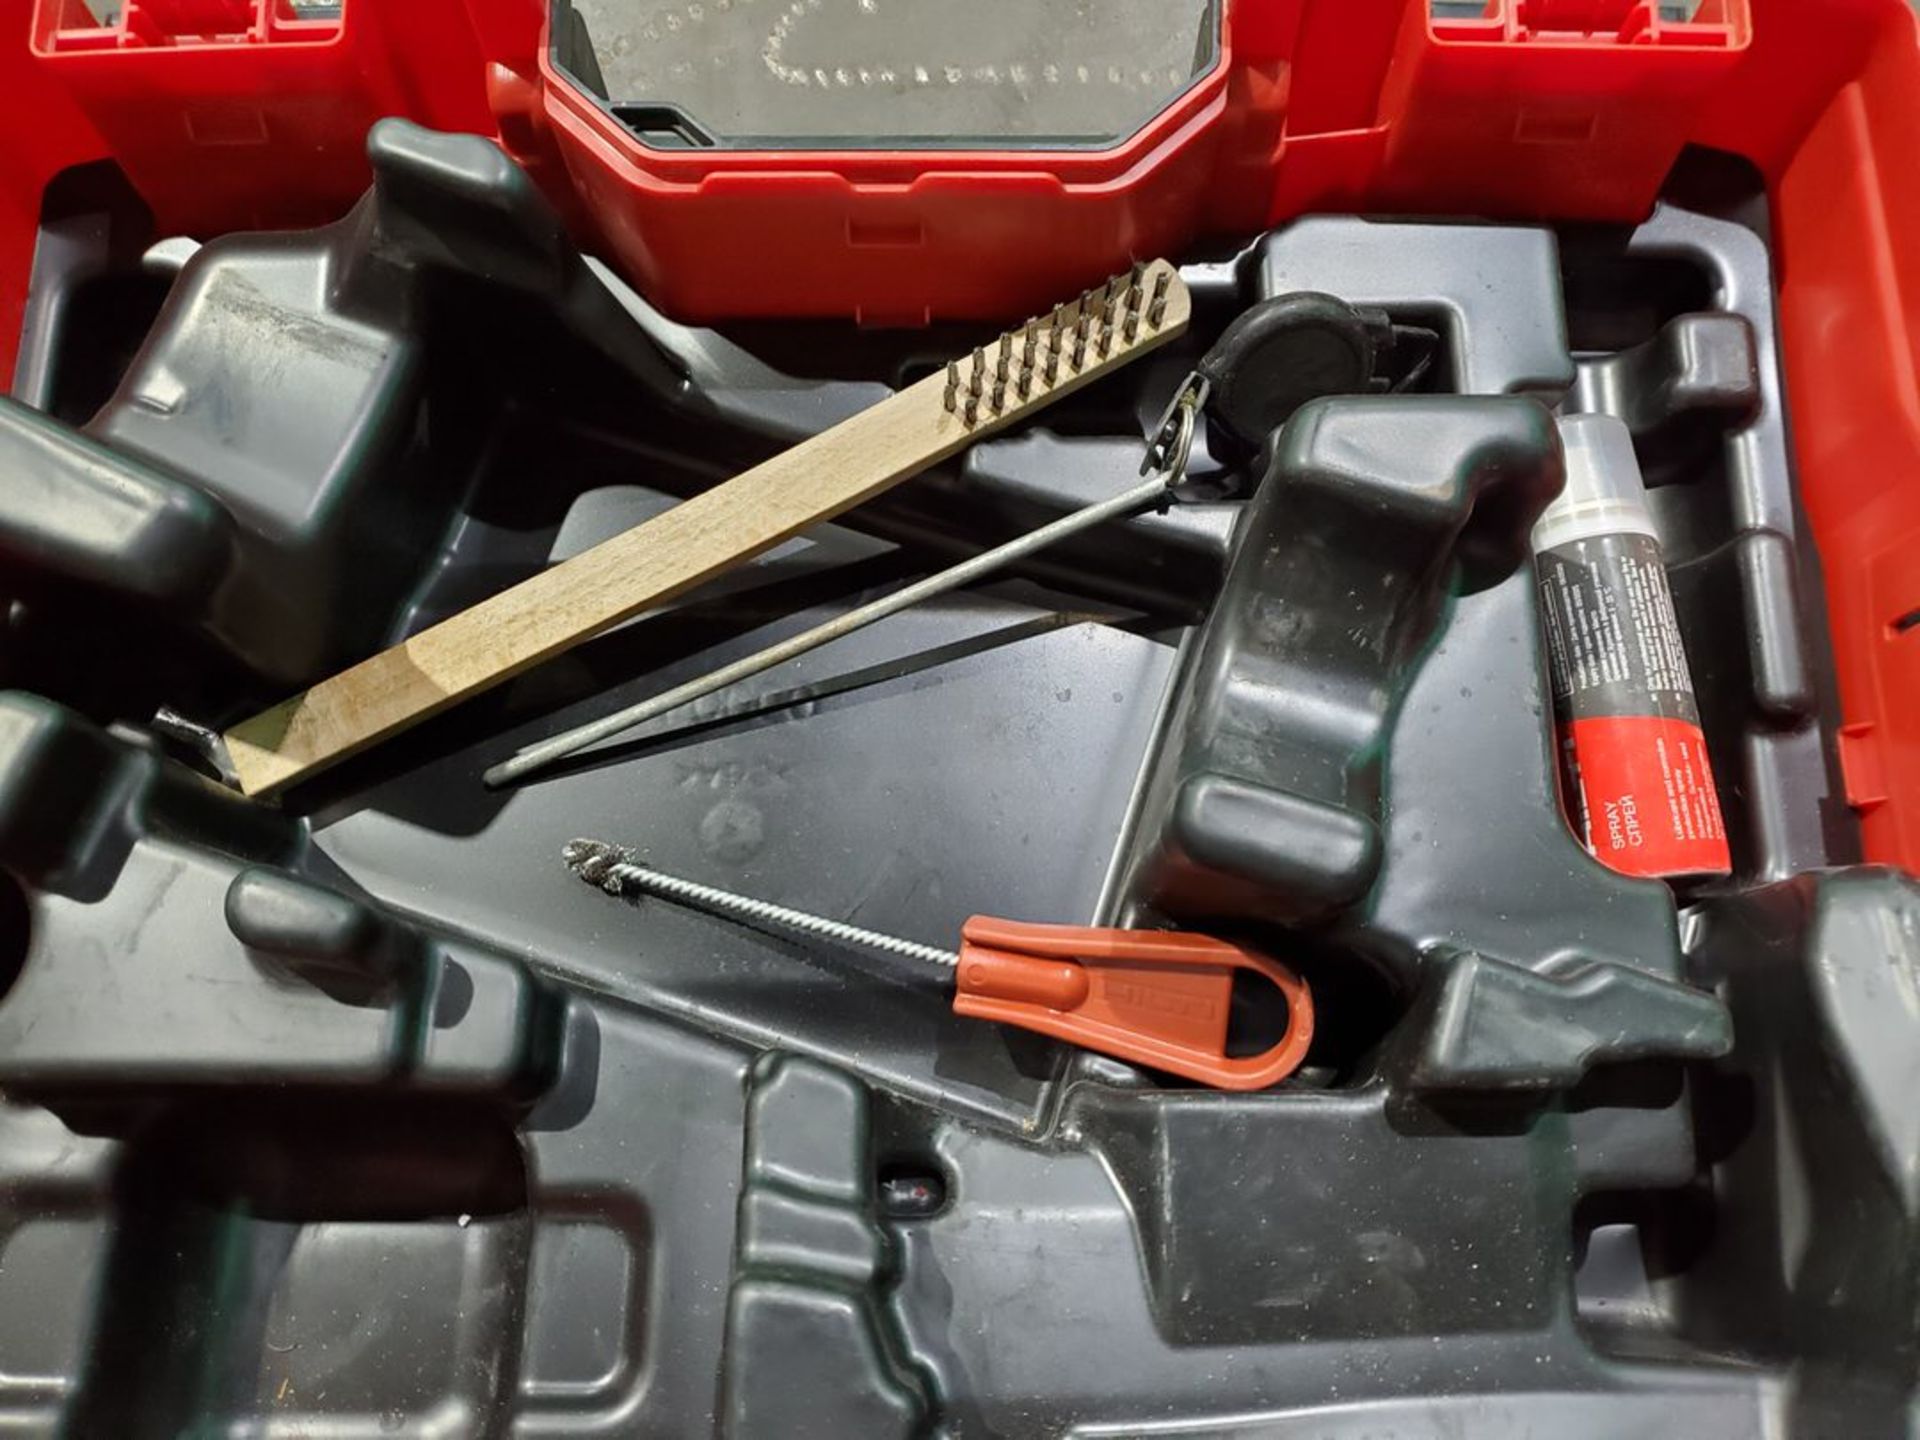 Hilti DX 5 Powder Actuated Nail Gun - Image 5 of 5